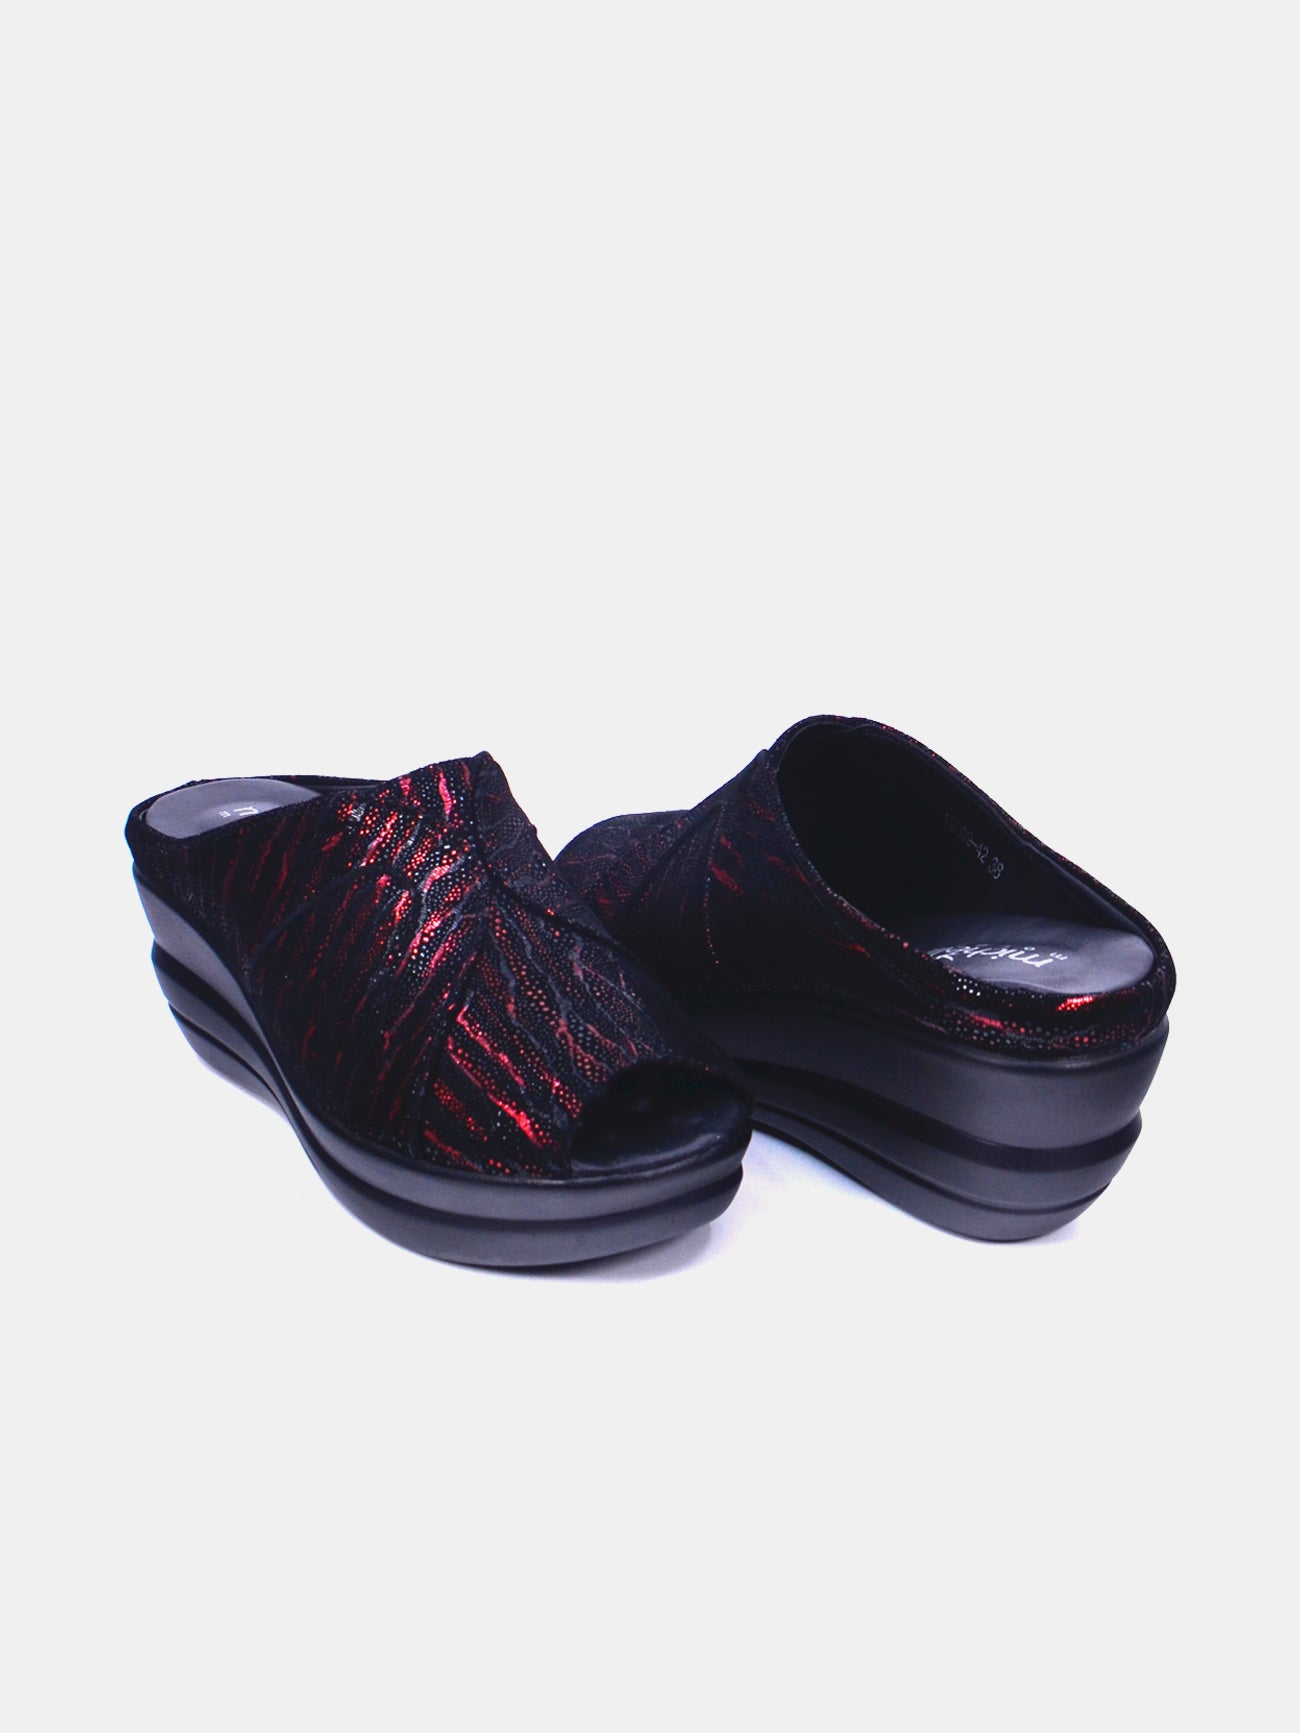 Michelle Morgan 19009-42 Women's Wedge Sandals #color_Maroon